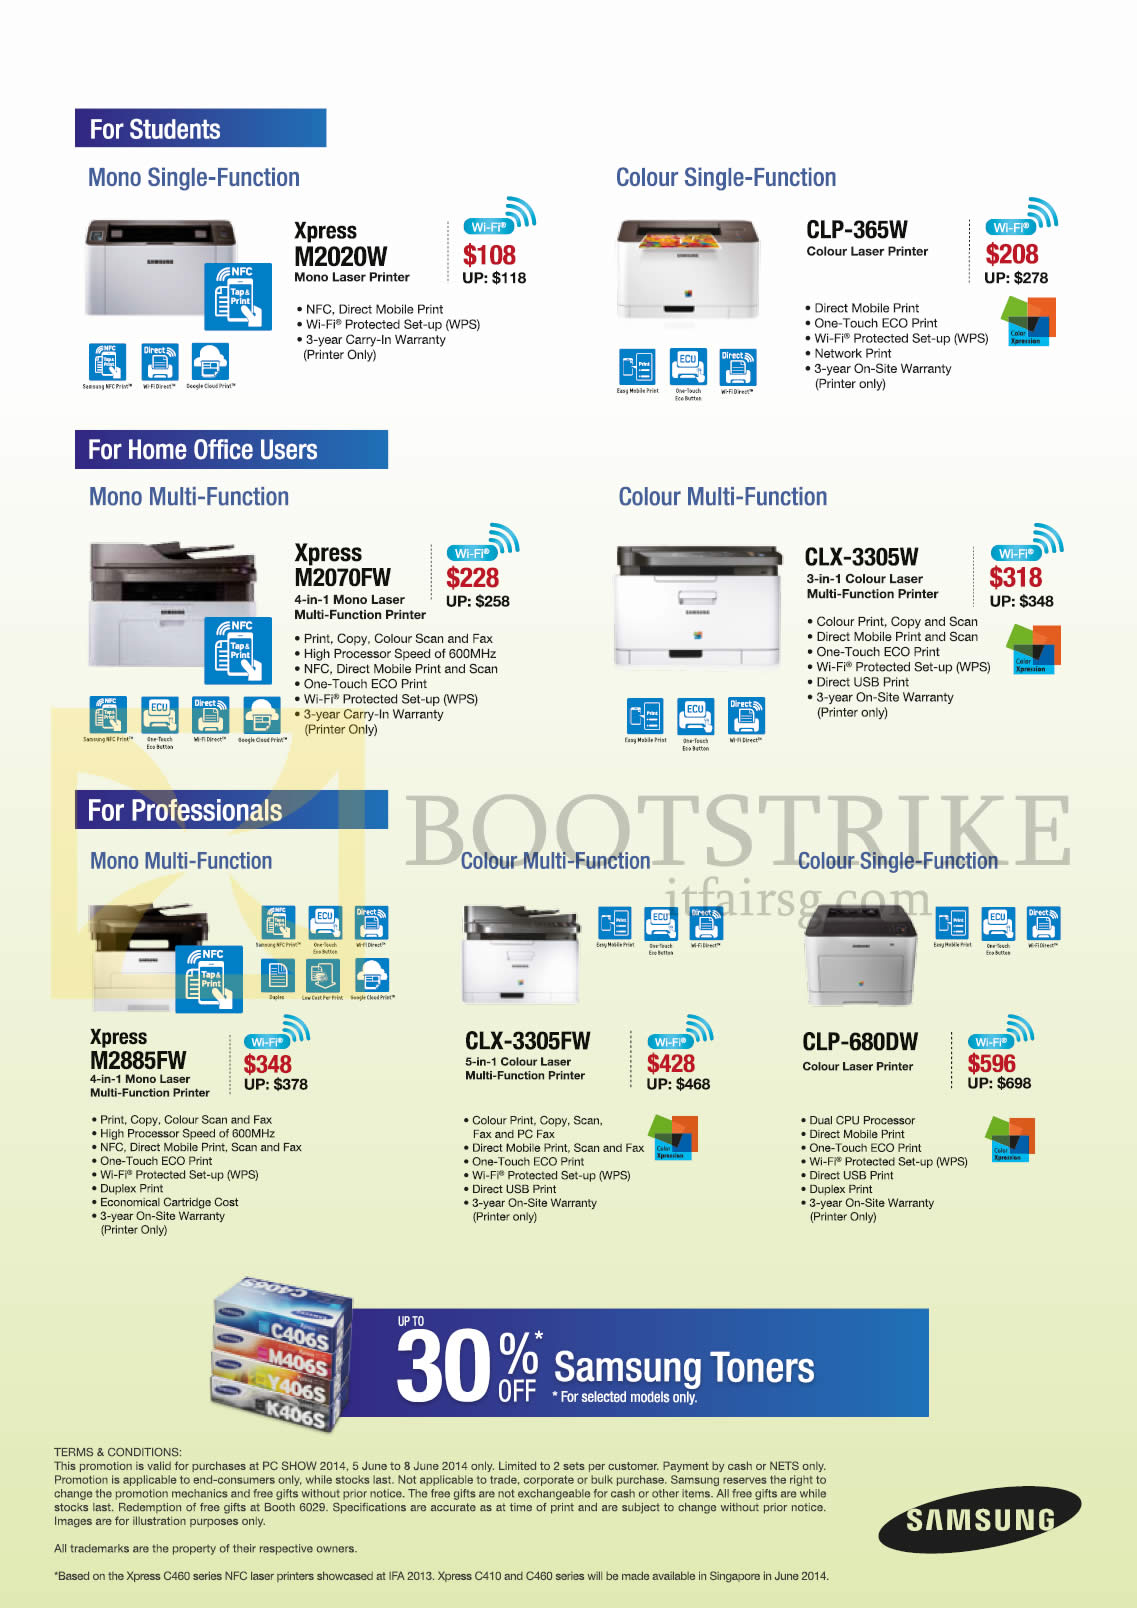 PC SHOW 2014 price list image brochure of Samsung Printers Xpress M2020W, M2070W, M2885FW, CLP-365W, CLX-3305W, CLX-3305FW, CLP-680DW